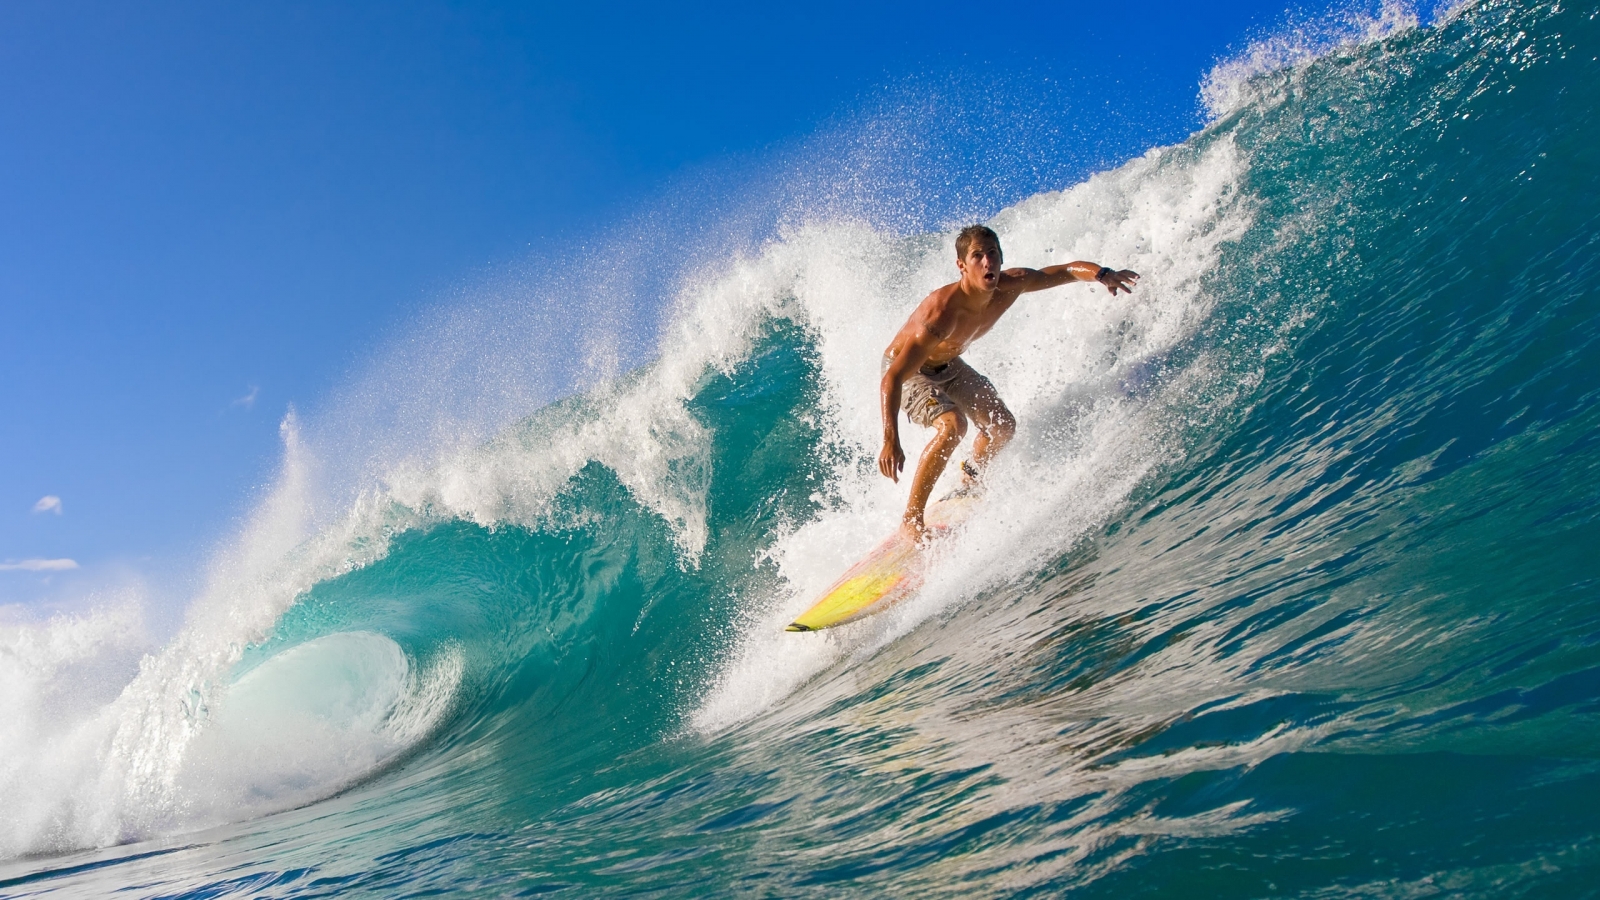 Summer Surf for 1600 x 900 HDTV resolution